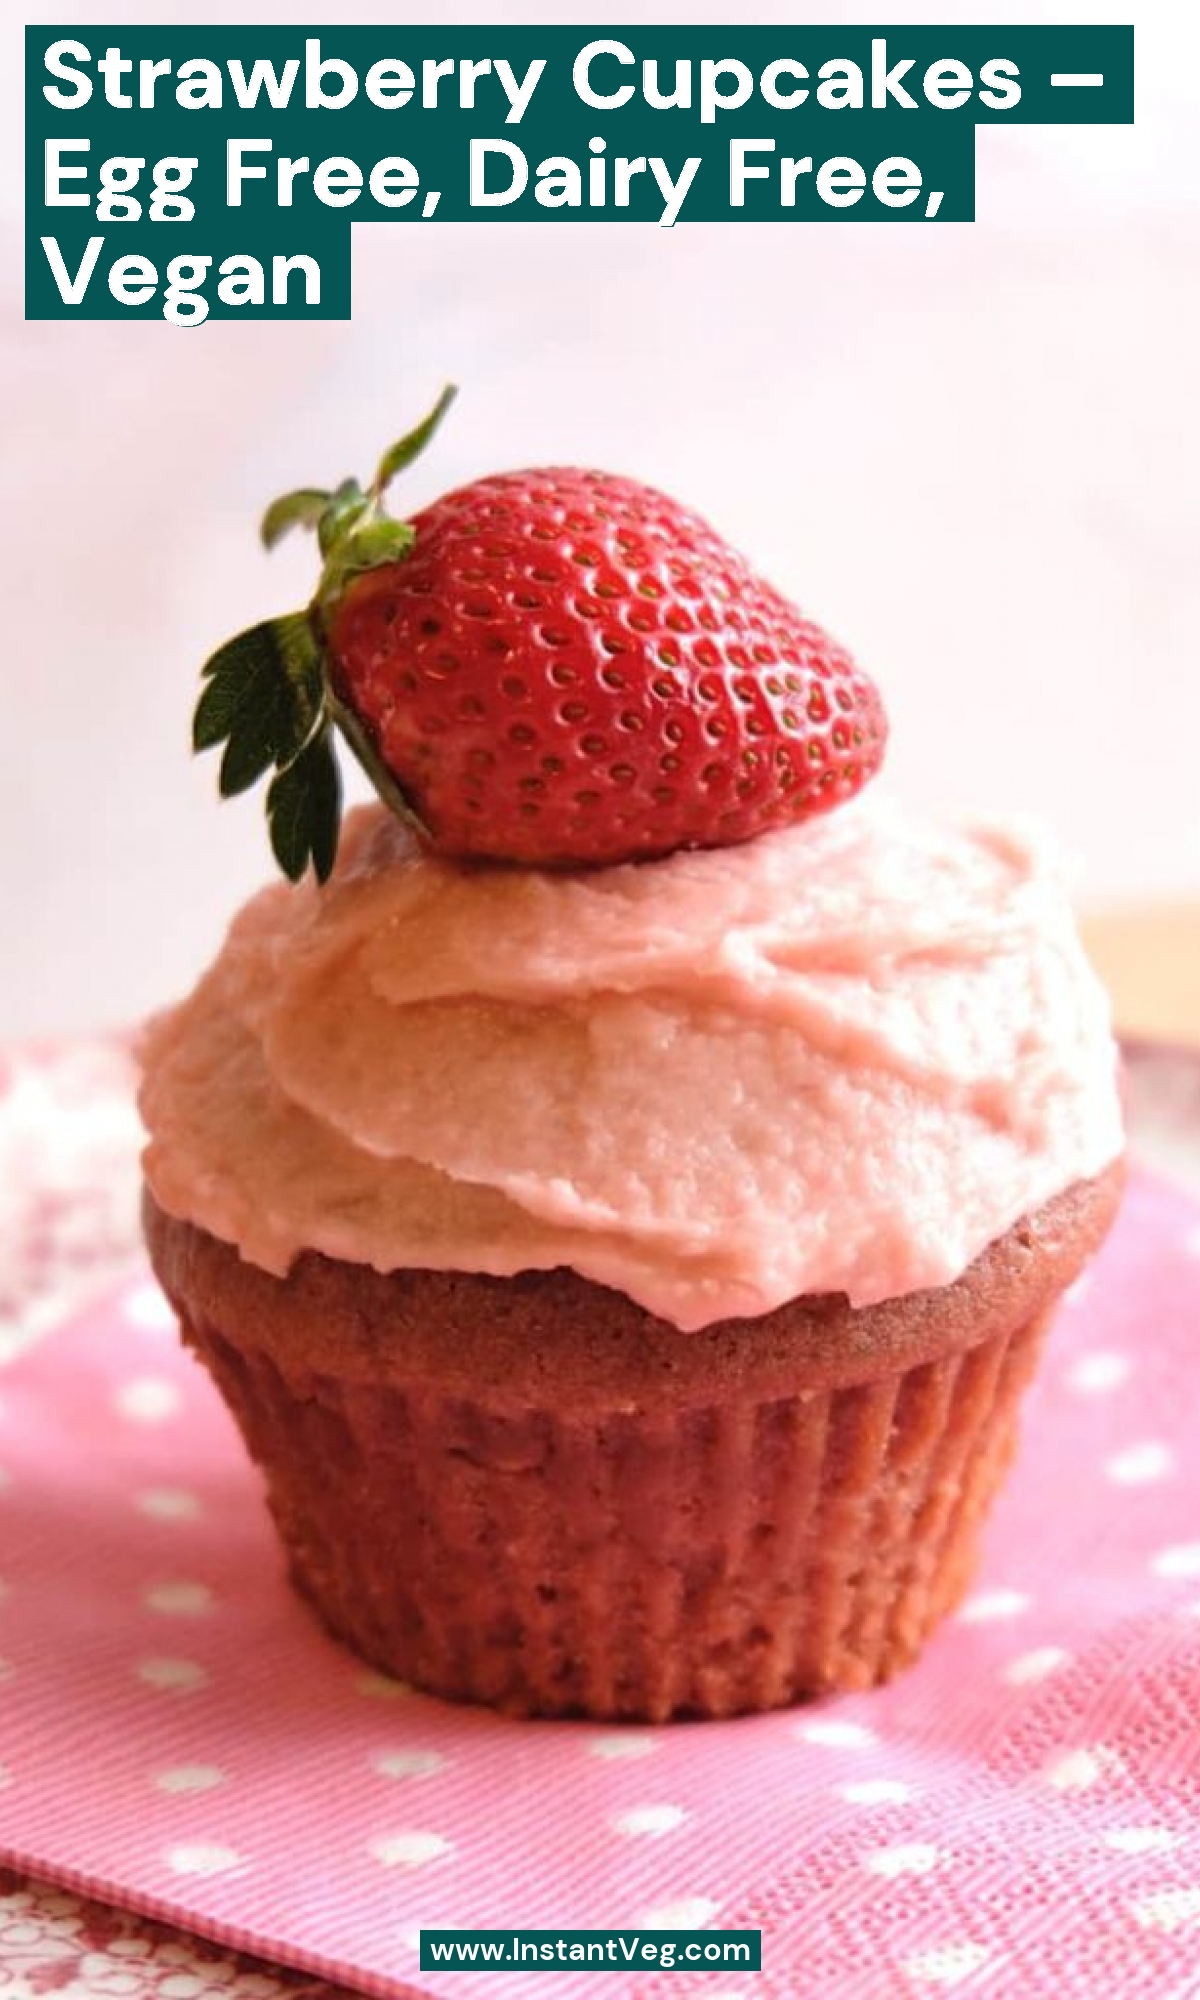 Strawberry Cupcakes – Egg Free, Dairy Free, Vegan